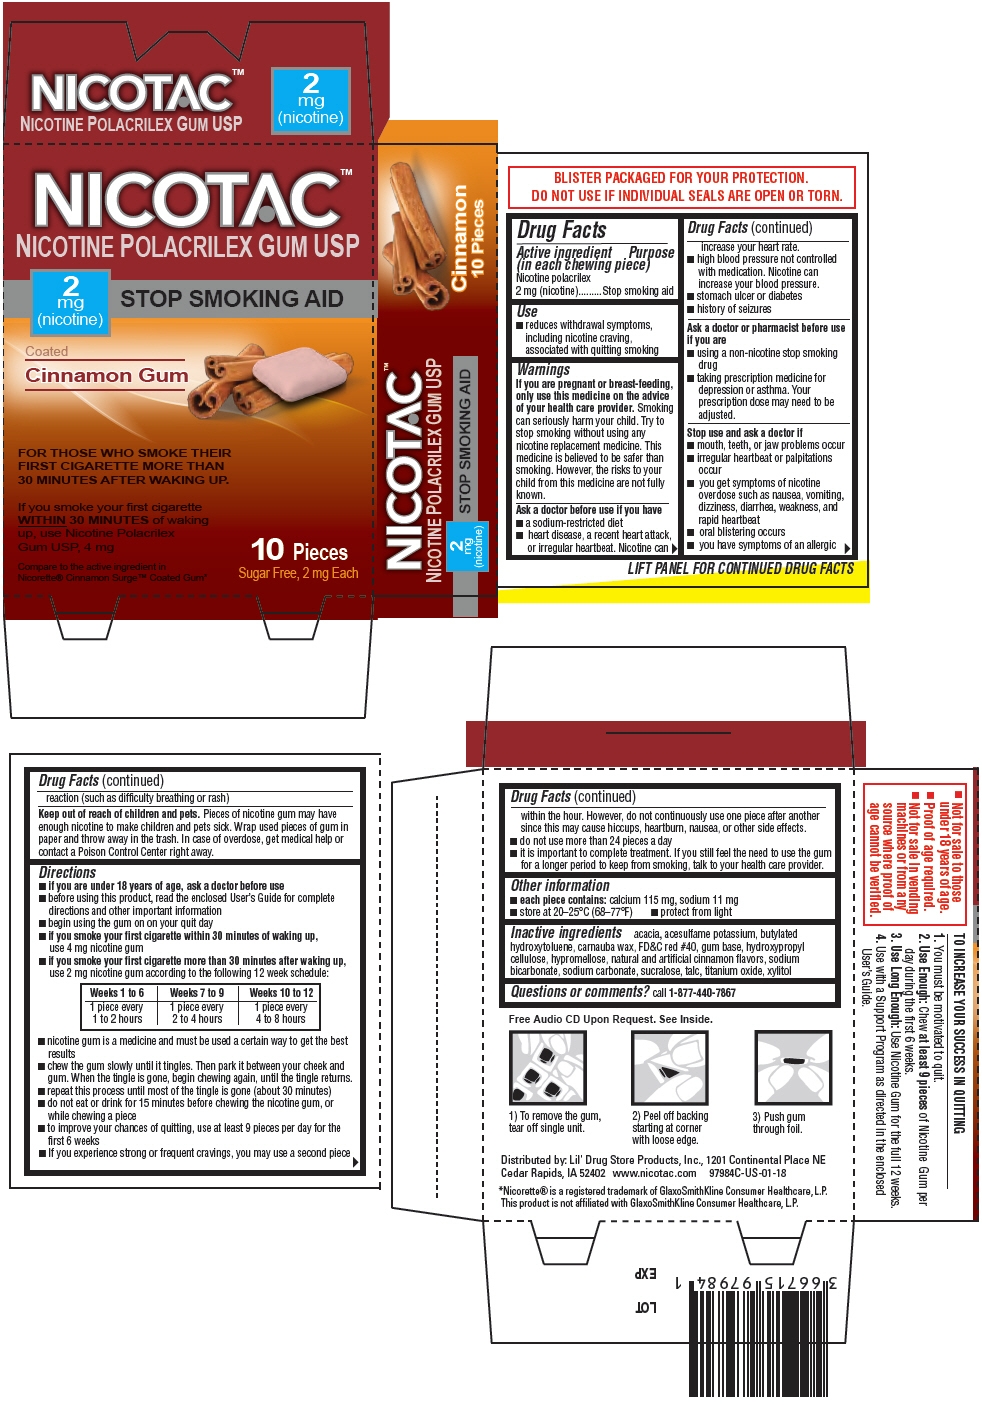 PRINCIPAL DISPLAY PANEL - 2 mg Gum Blister Pack Carton